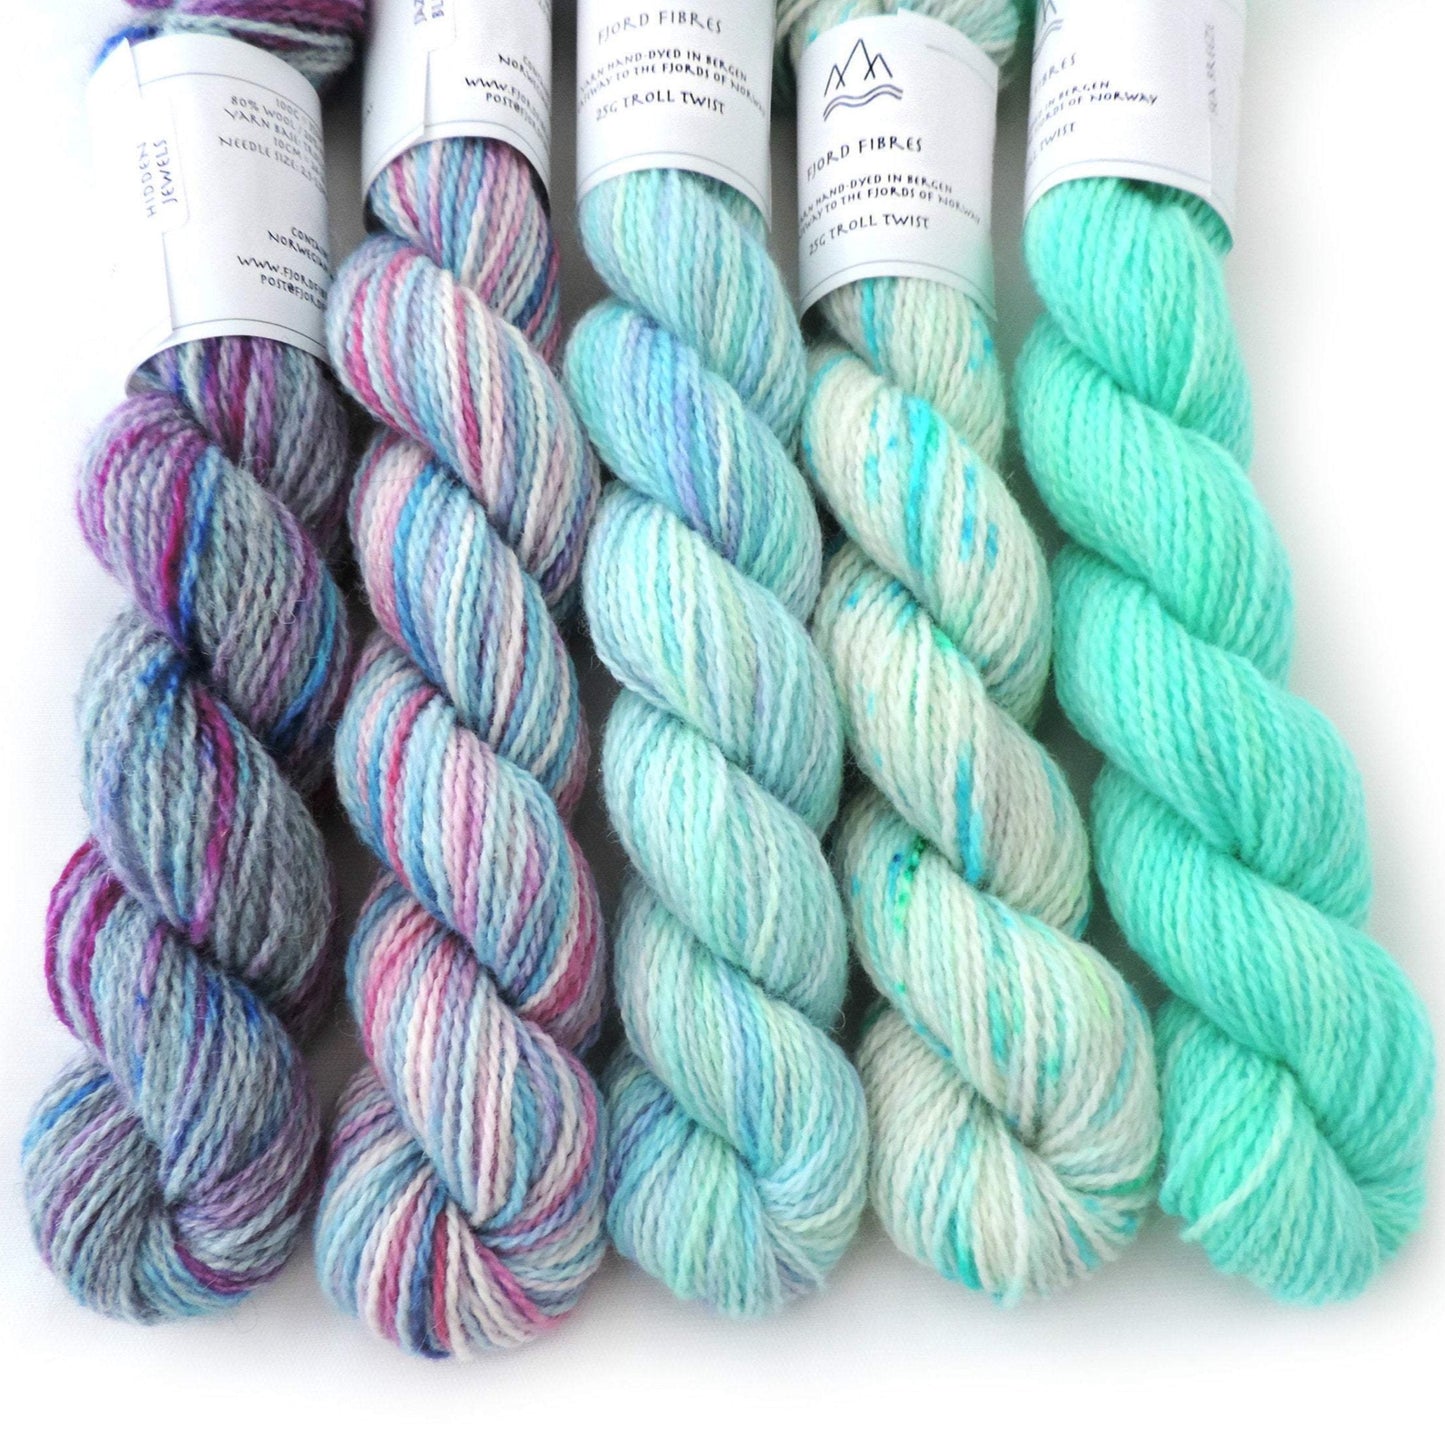 Blue Calm Mini Skein Set - Trollfjord Sock - Hand Dyed Yarn - Variegated Yarn